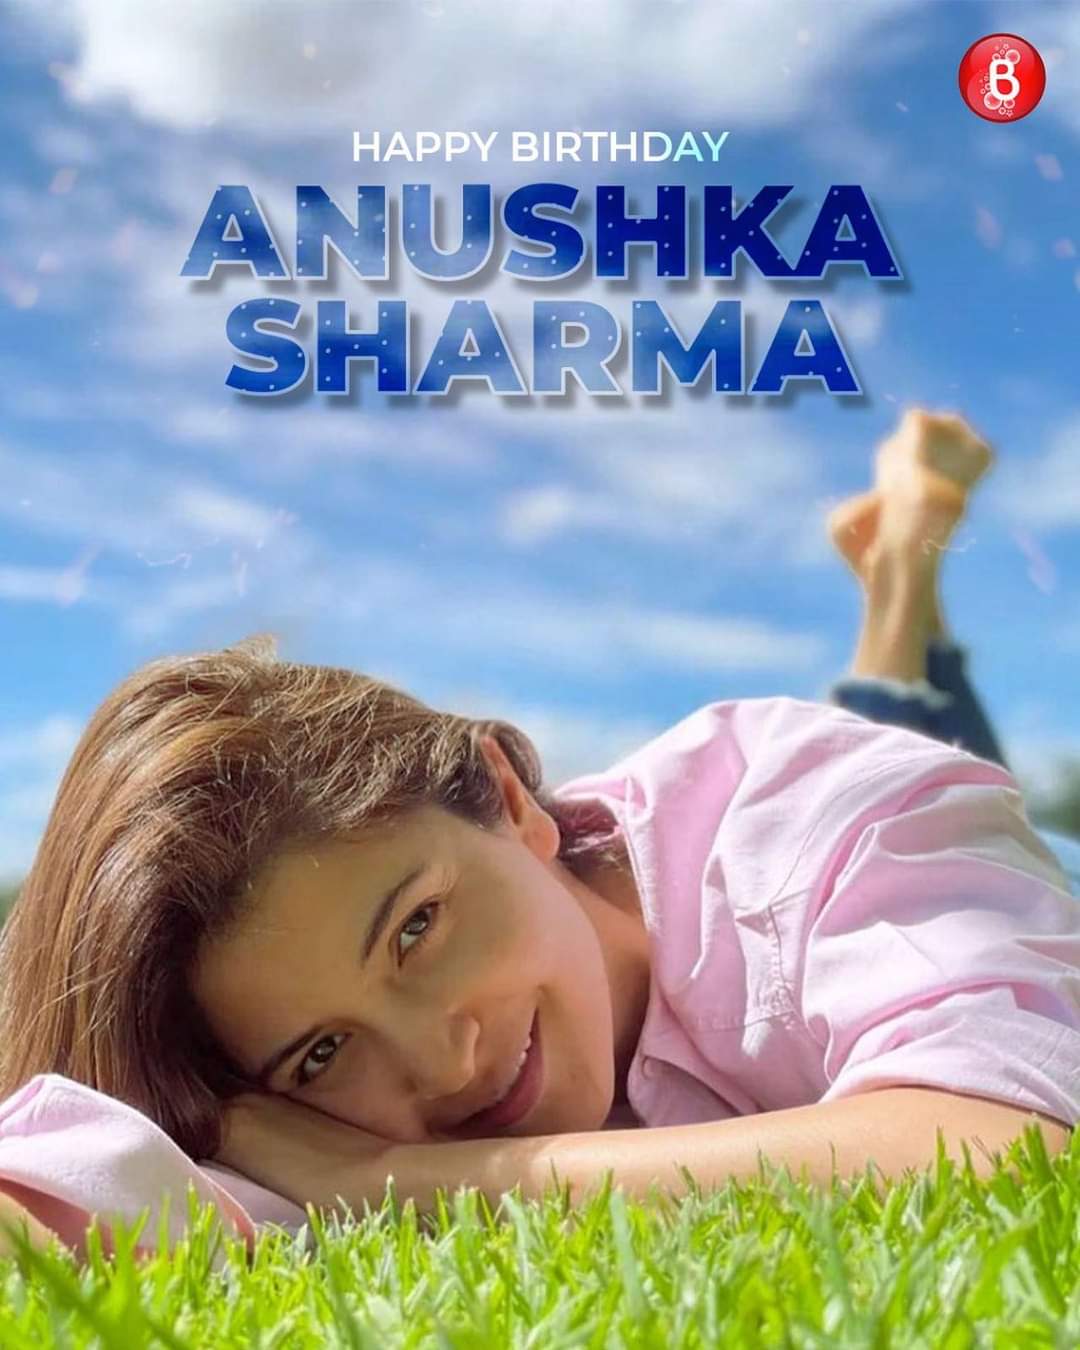 Happy birthday Anushka Sharma 